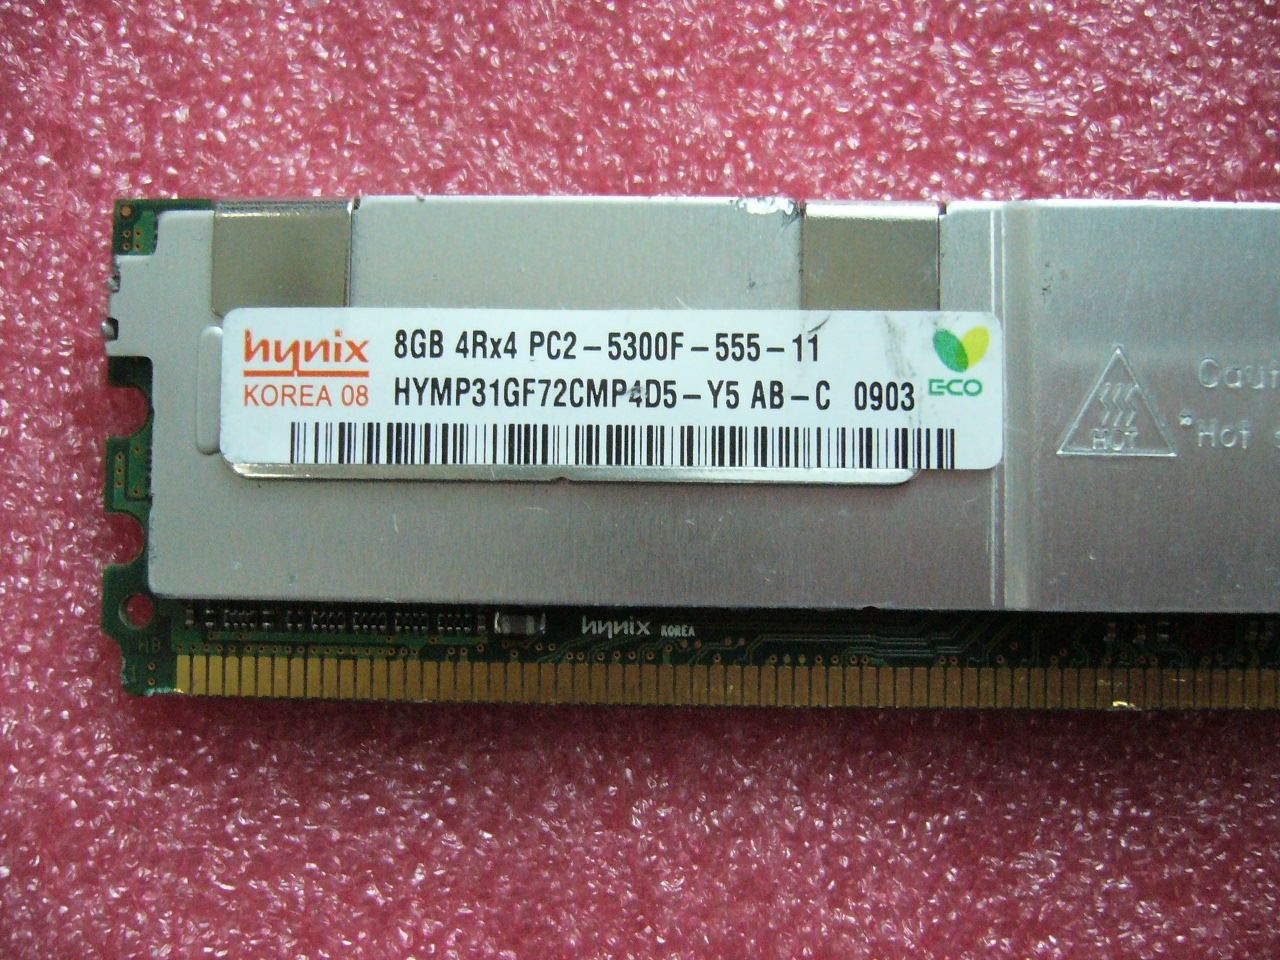 QTY 1x 8GB DDR2 PC2-5300F ECC FBD Server memory IBM P/N 43X5285 46C7576 - zum Schließen ins Bild klicken